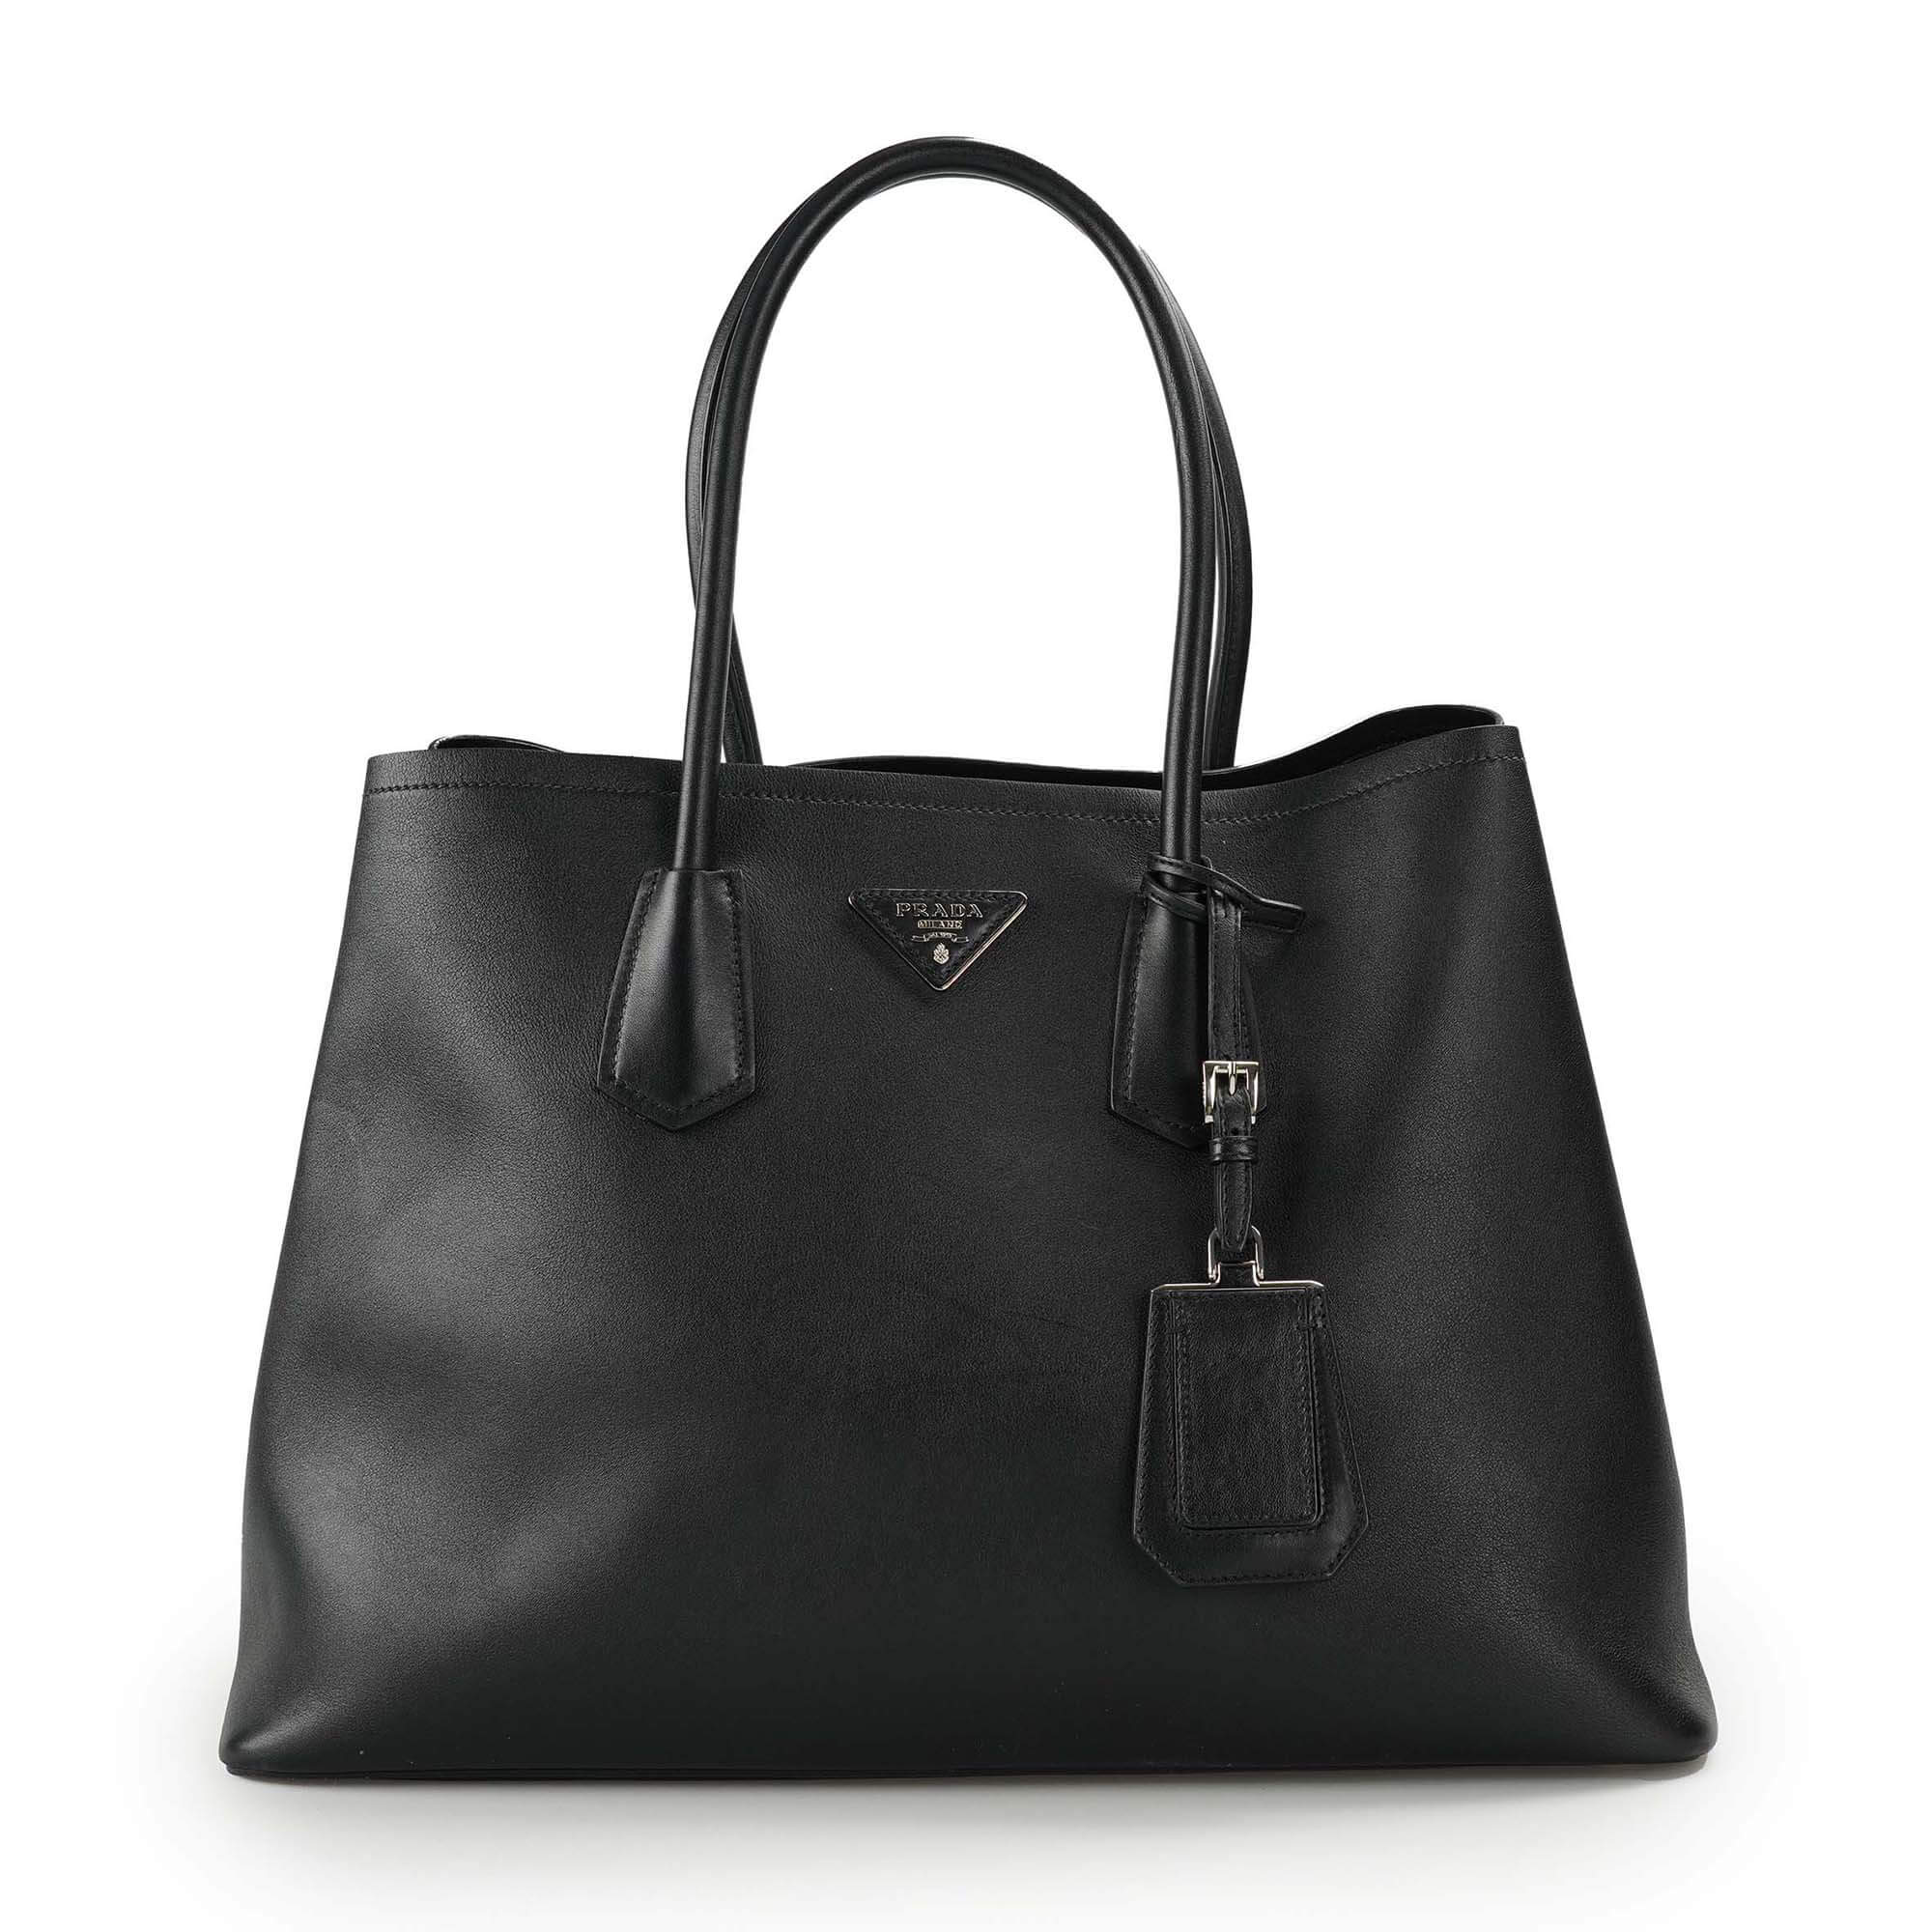 Prada - Black Smooth Leather Double Cuir Bag 